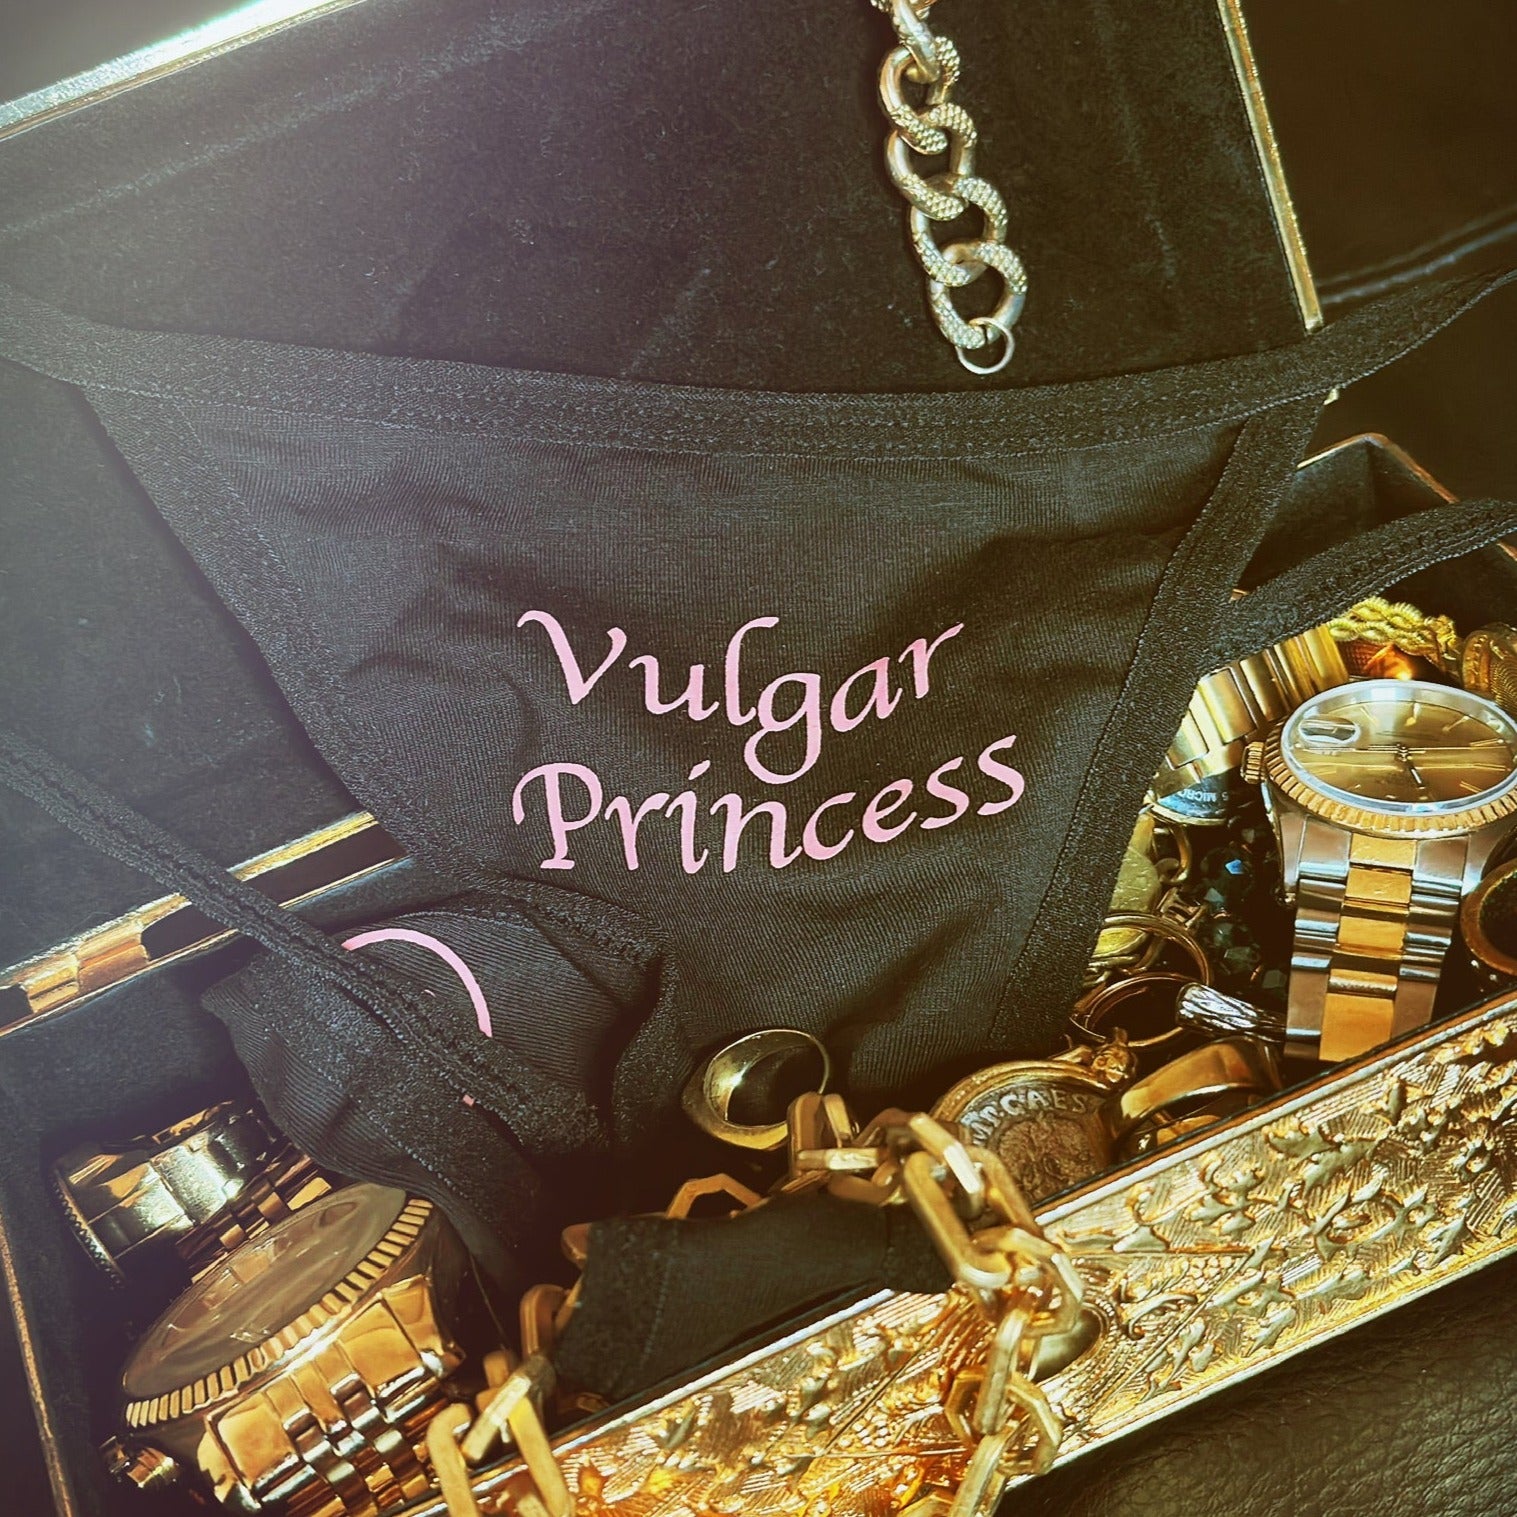 Vulgar Princess - sameoldmistakes